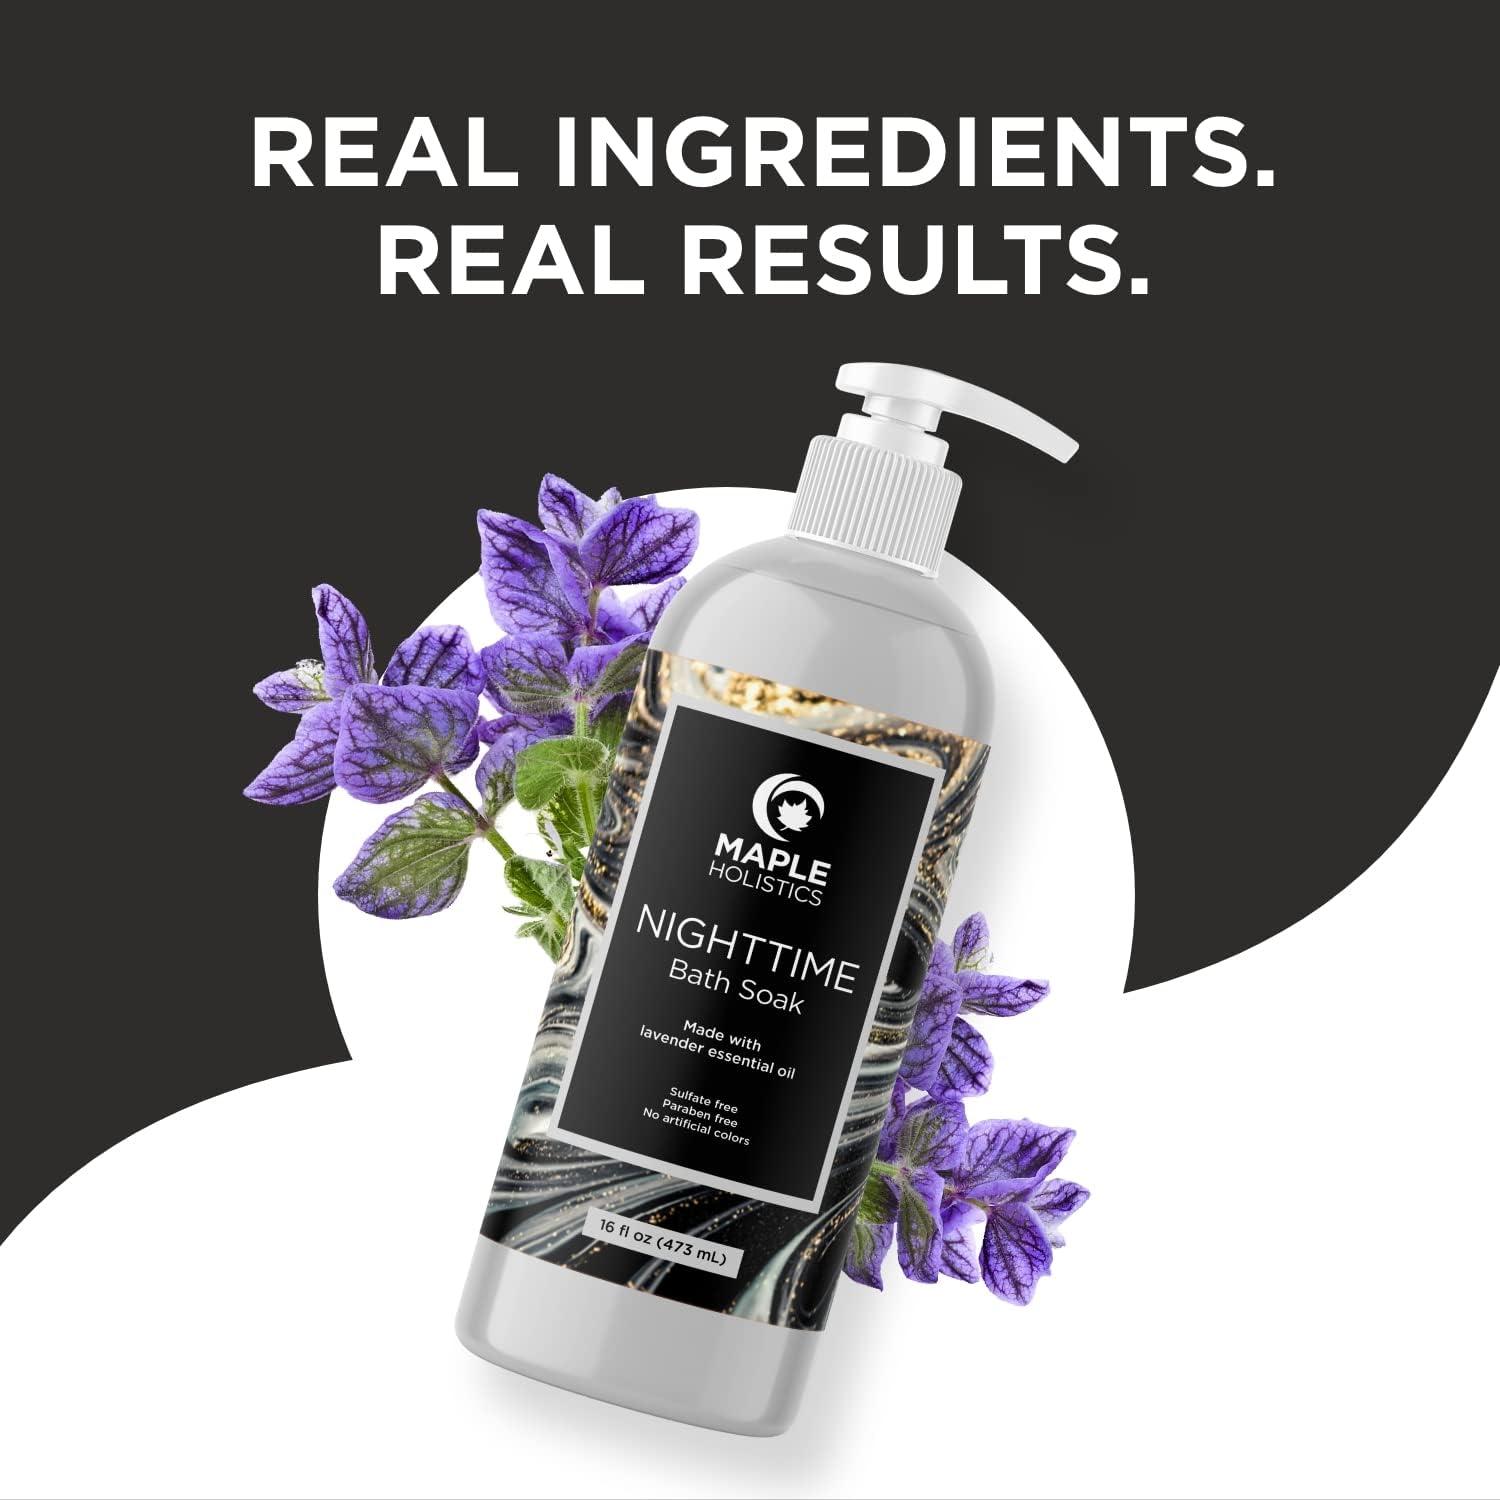 Maple Holistics Pure Lavender Essential Oil 4oz - Undiluted, Aromatherapy,  for Hair, Skin, Sleep, Diffuser, Bath